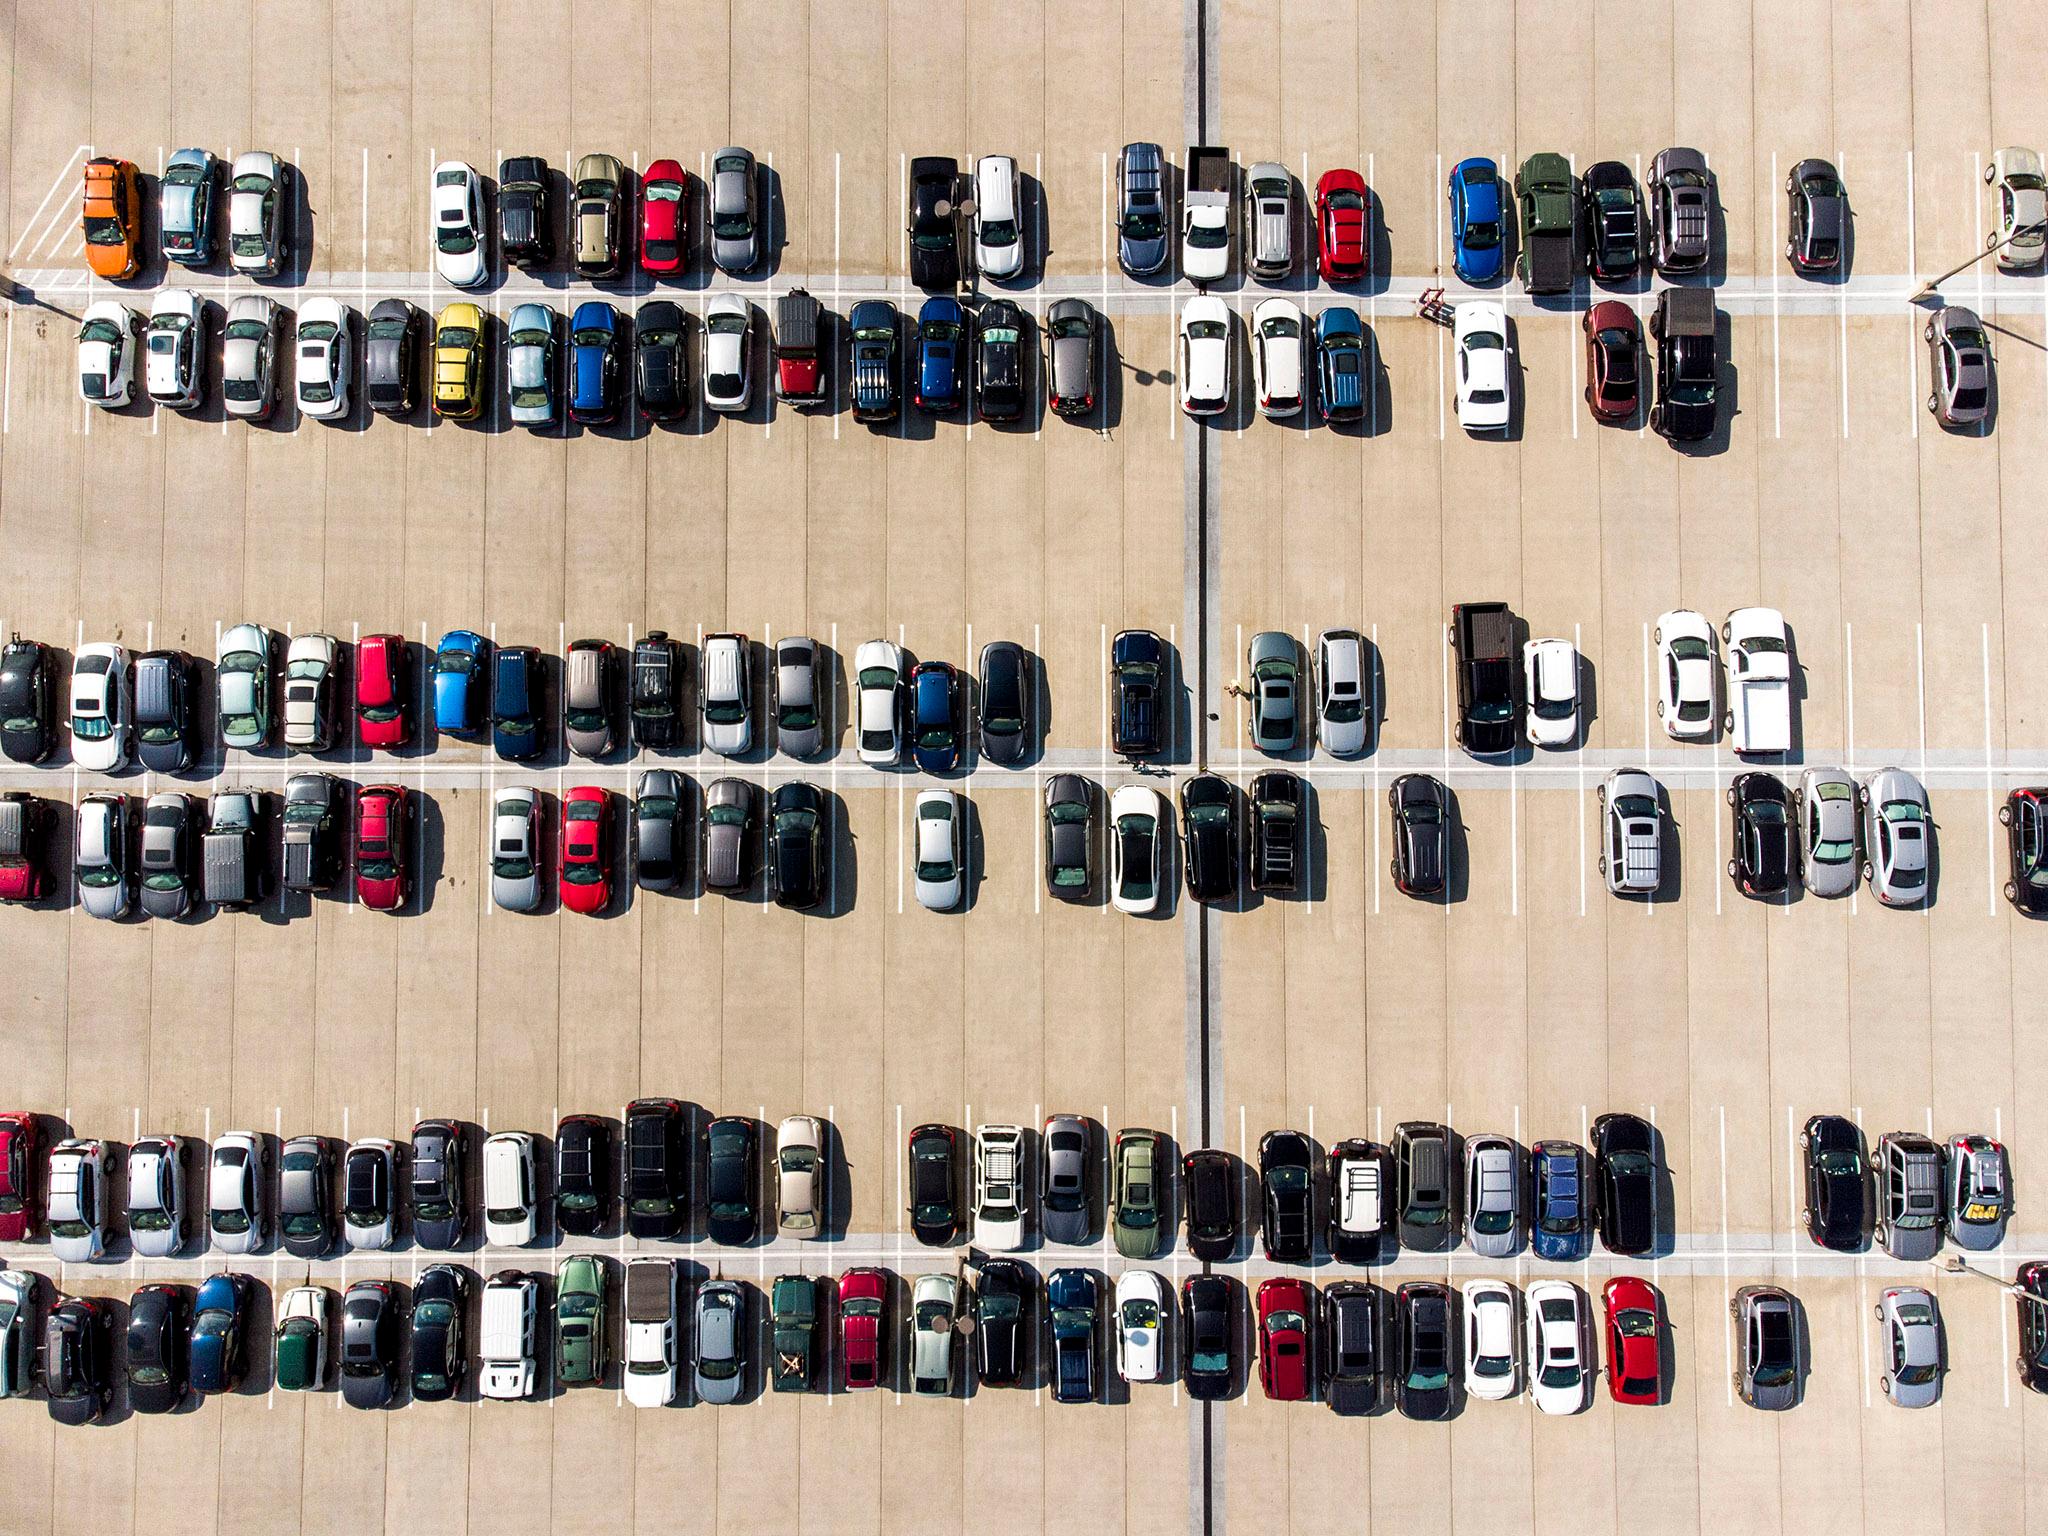 A pretty full parking lot at the University of Denver. Sept. 28, 2021.